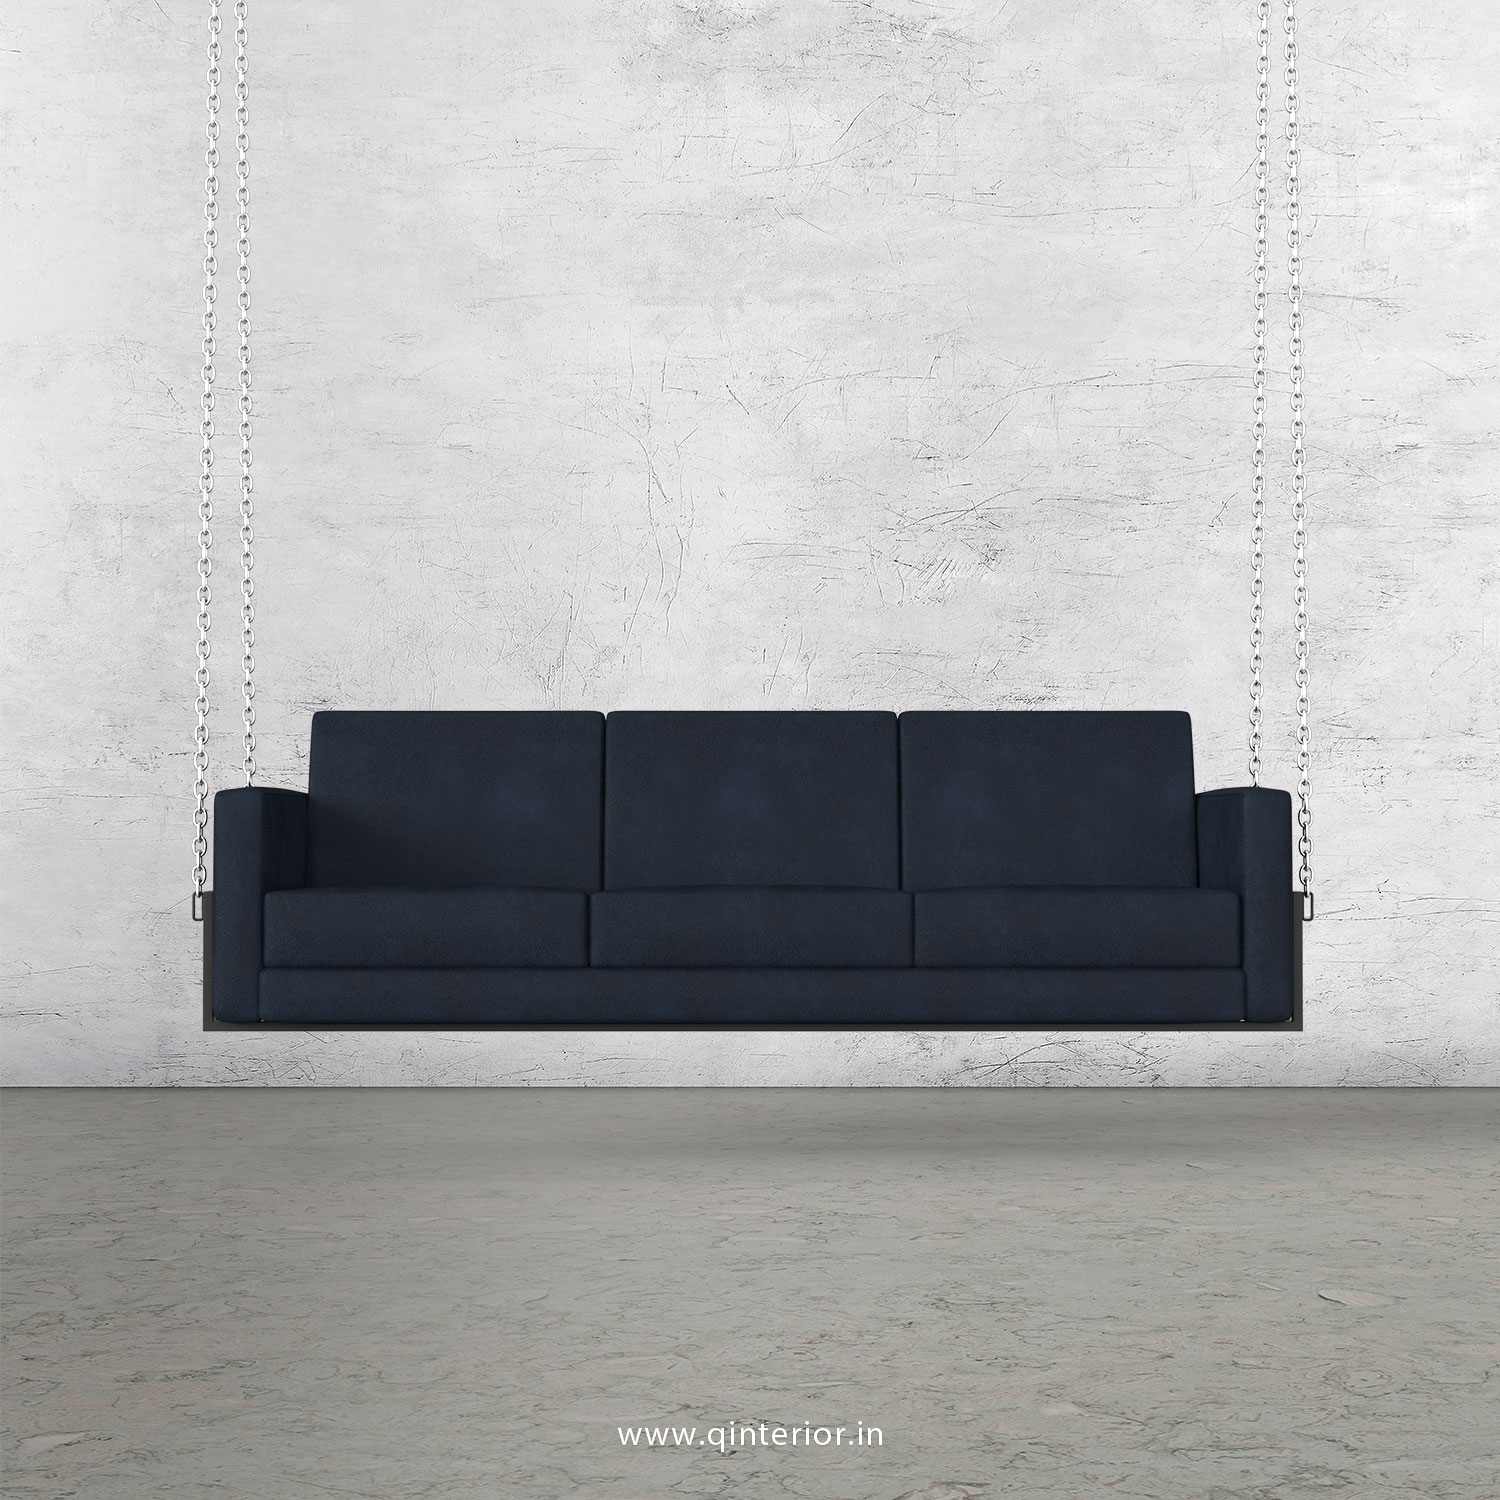 NIRVANA 3 Seater Swing Sofa in Fab Leather Fabric - SSF001 FL13